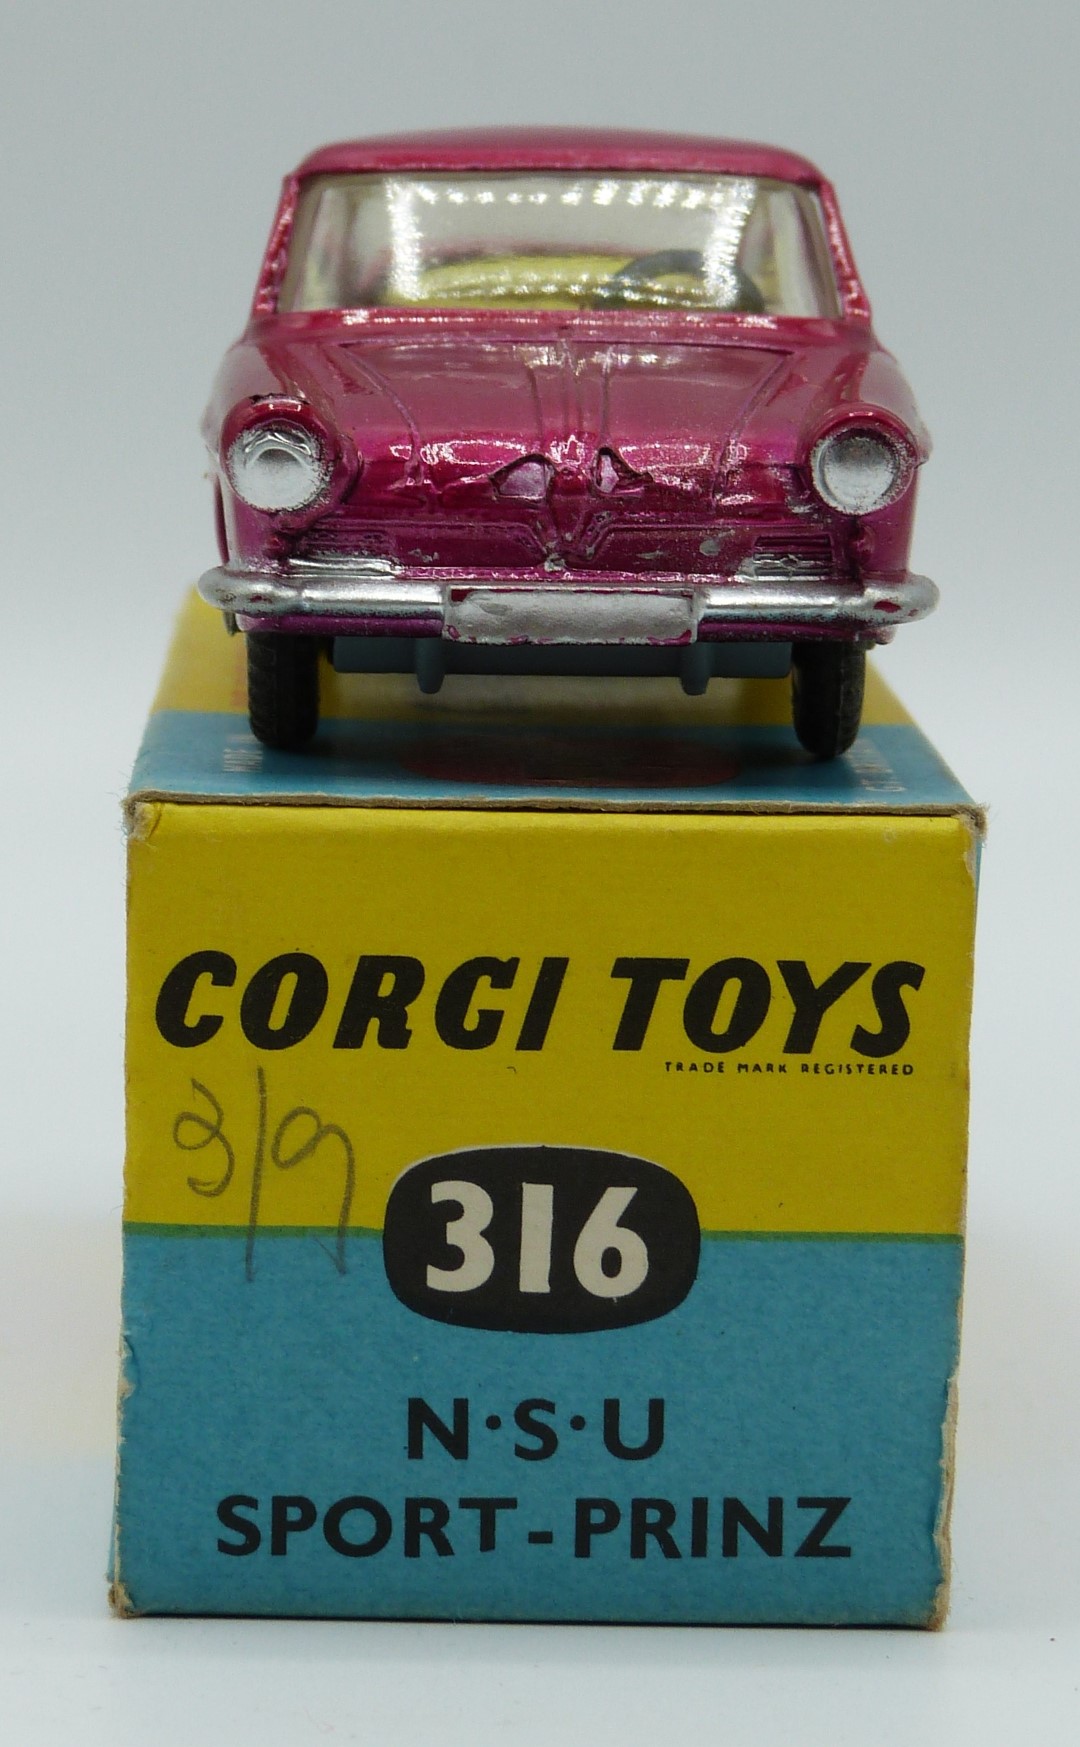 Corgi Toys diecast model NSU Prinz Sport with metallic pink body, cream interior and silver hubs, - Image 2 of 6